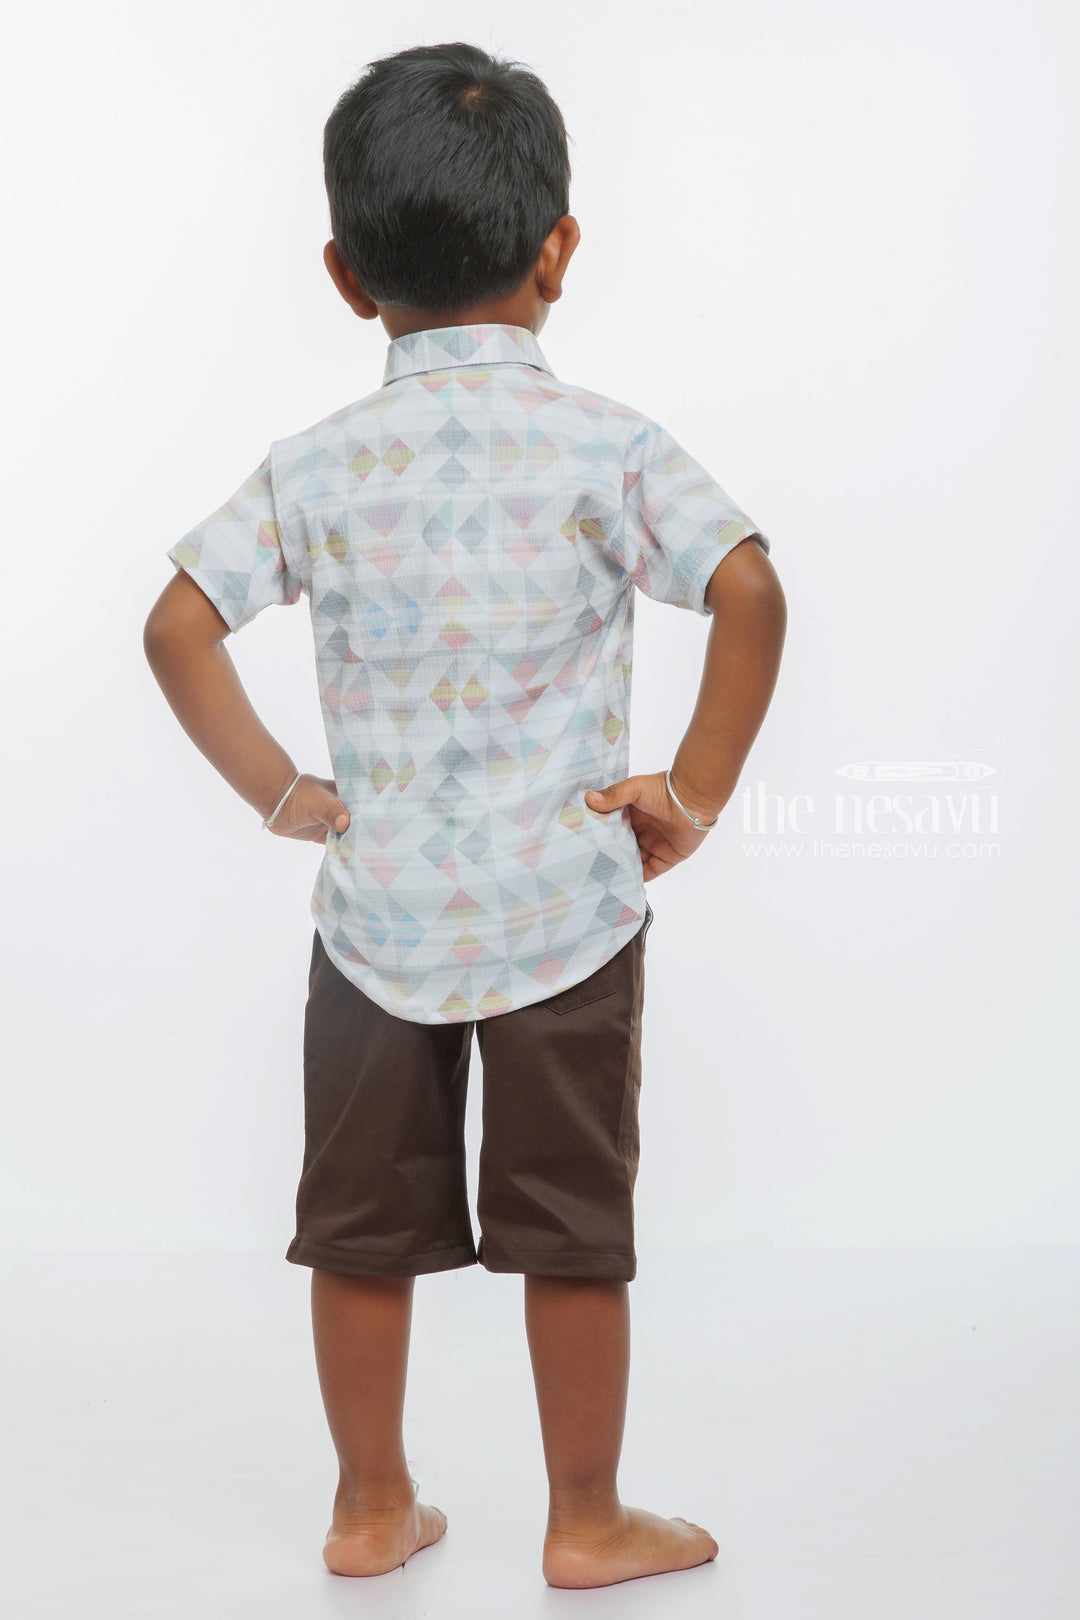 The Nesavu Boys Casual Set Geometric Cool Casual Shirt and Shorts Set for Boys Nesavu Shop Boys Geometric Print Shirt and Shorts Outfit | Stylish Casual Sets for Kids | The Nesavu